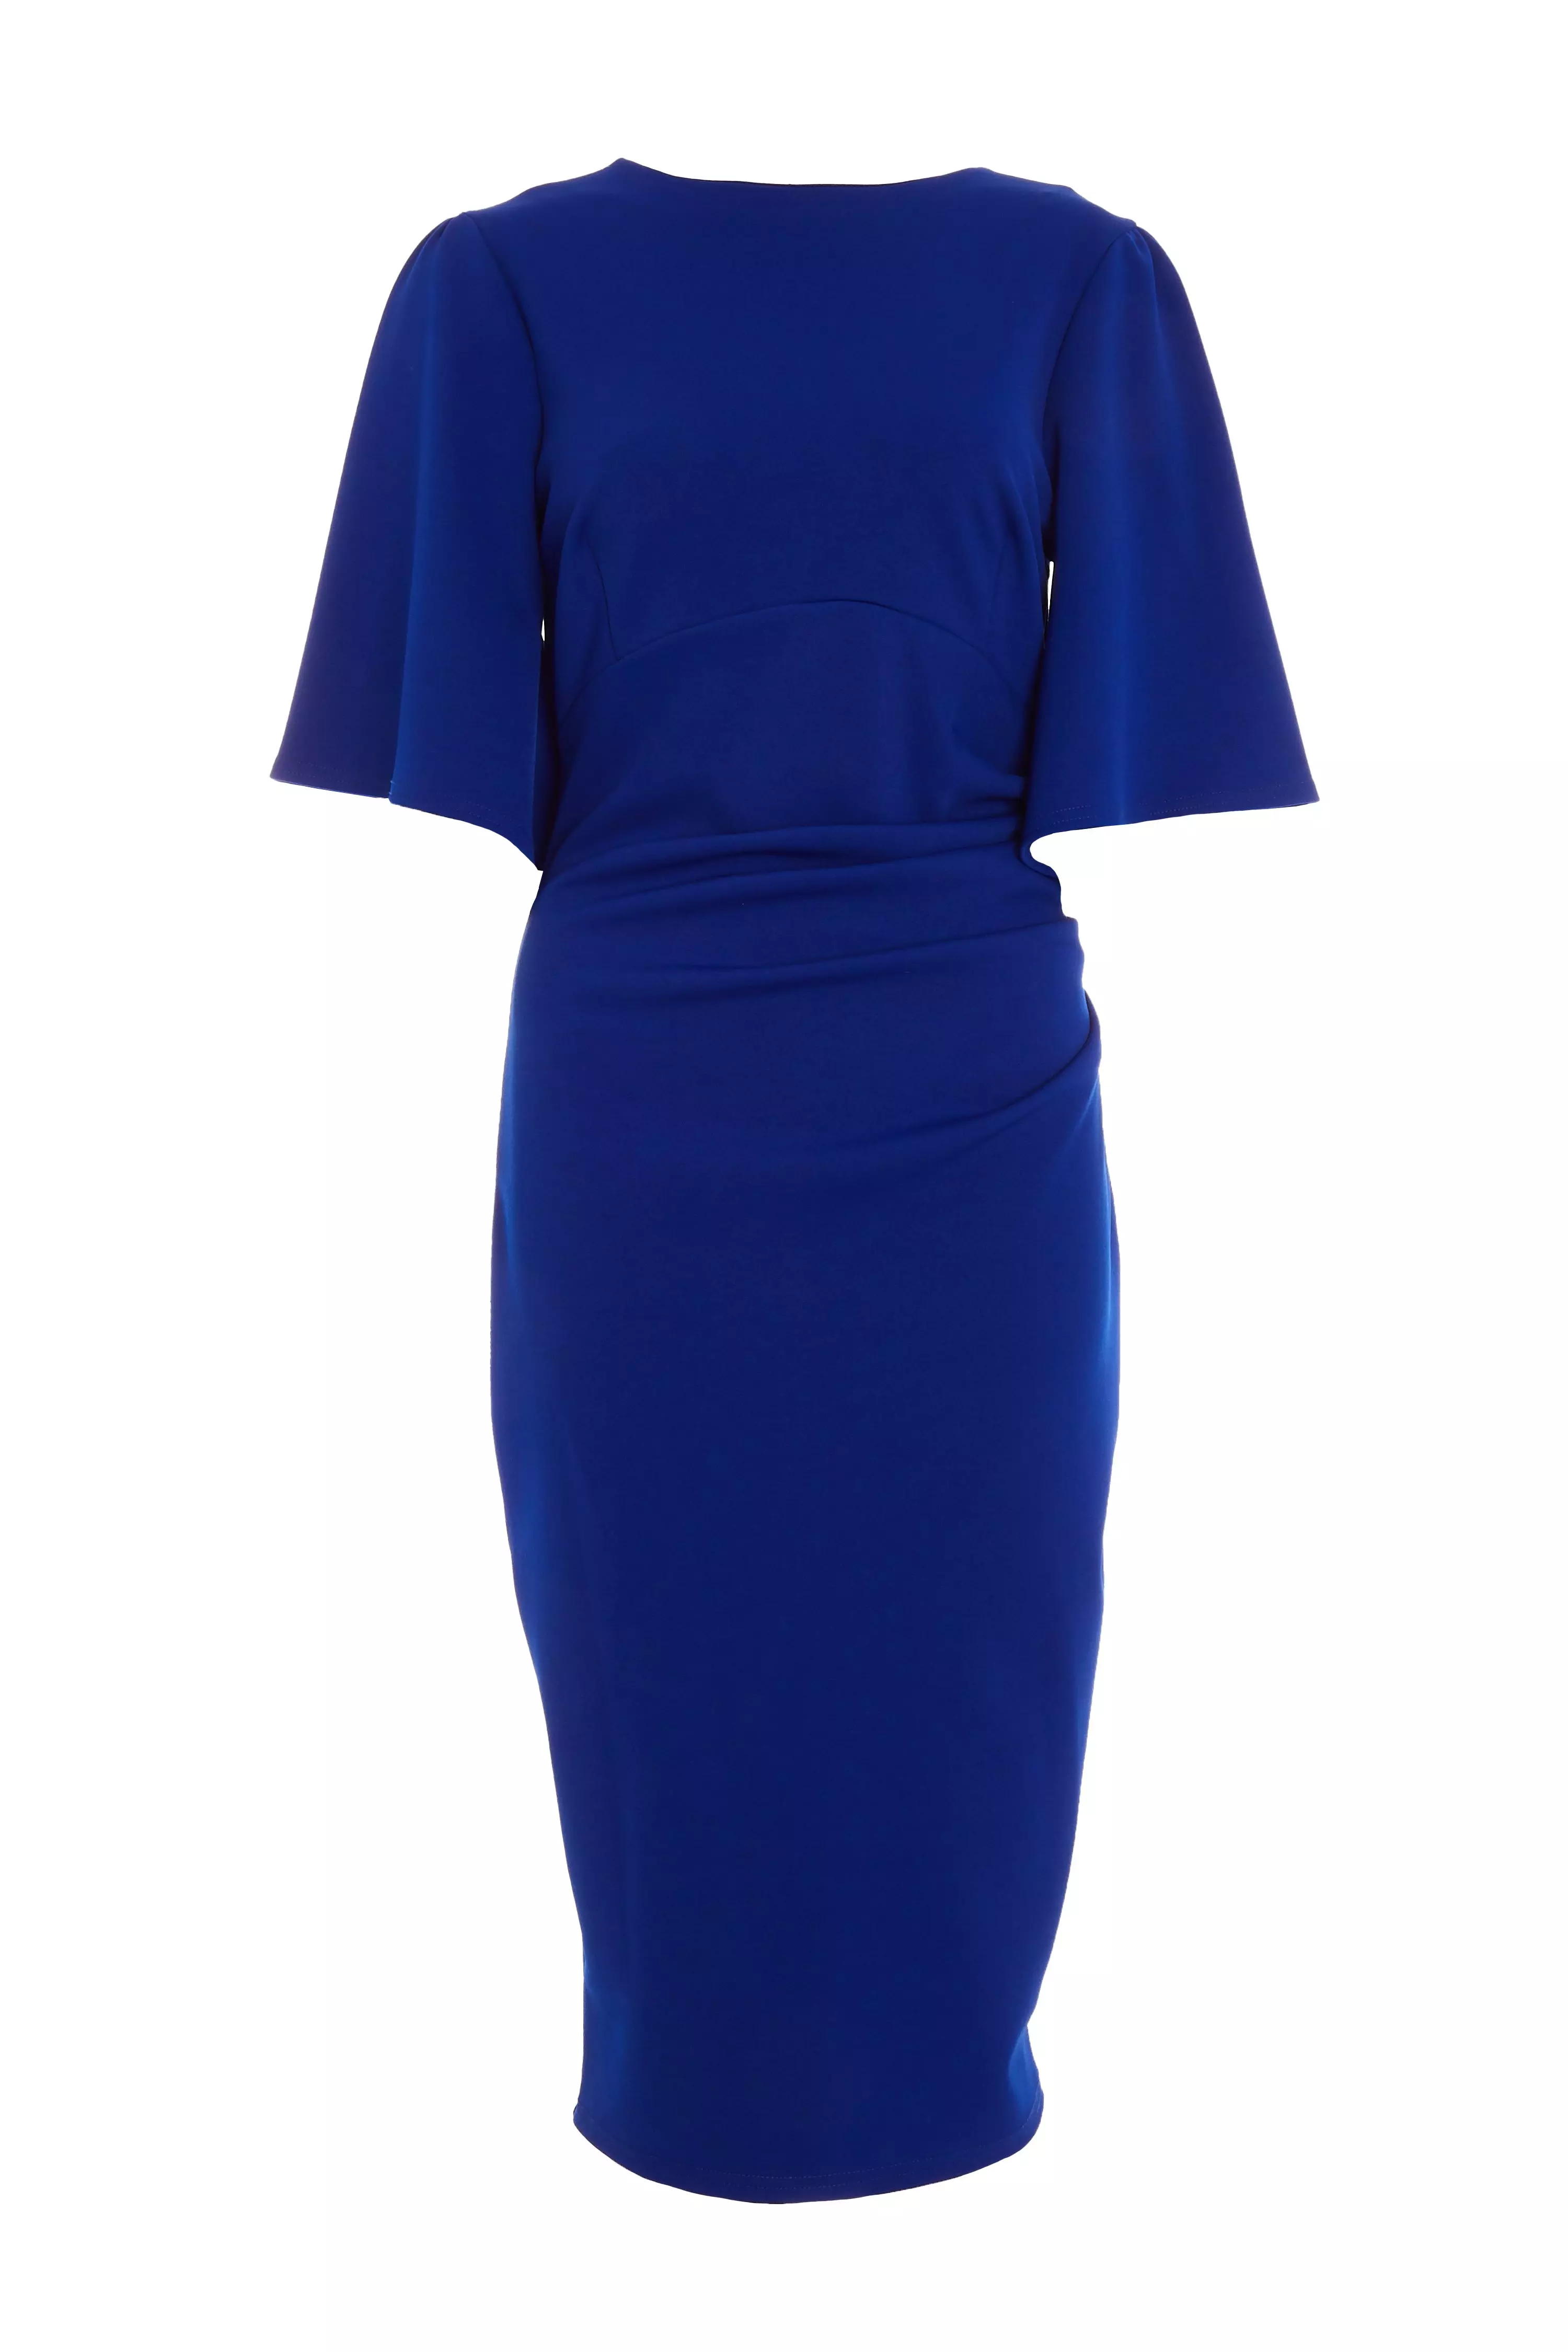 Blue Half Sleeve Midi Dress - QUIZ Clothing